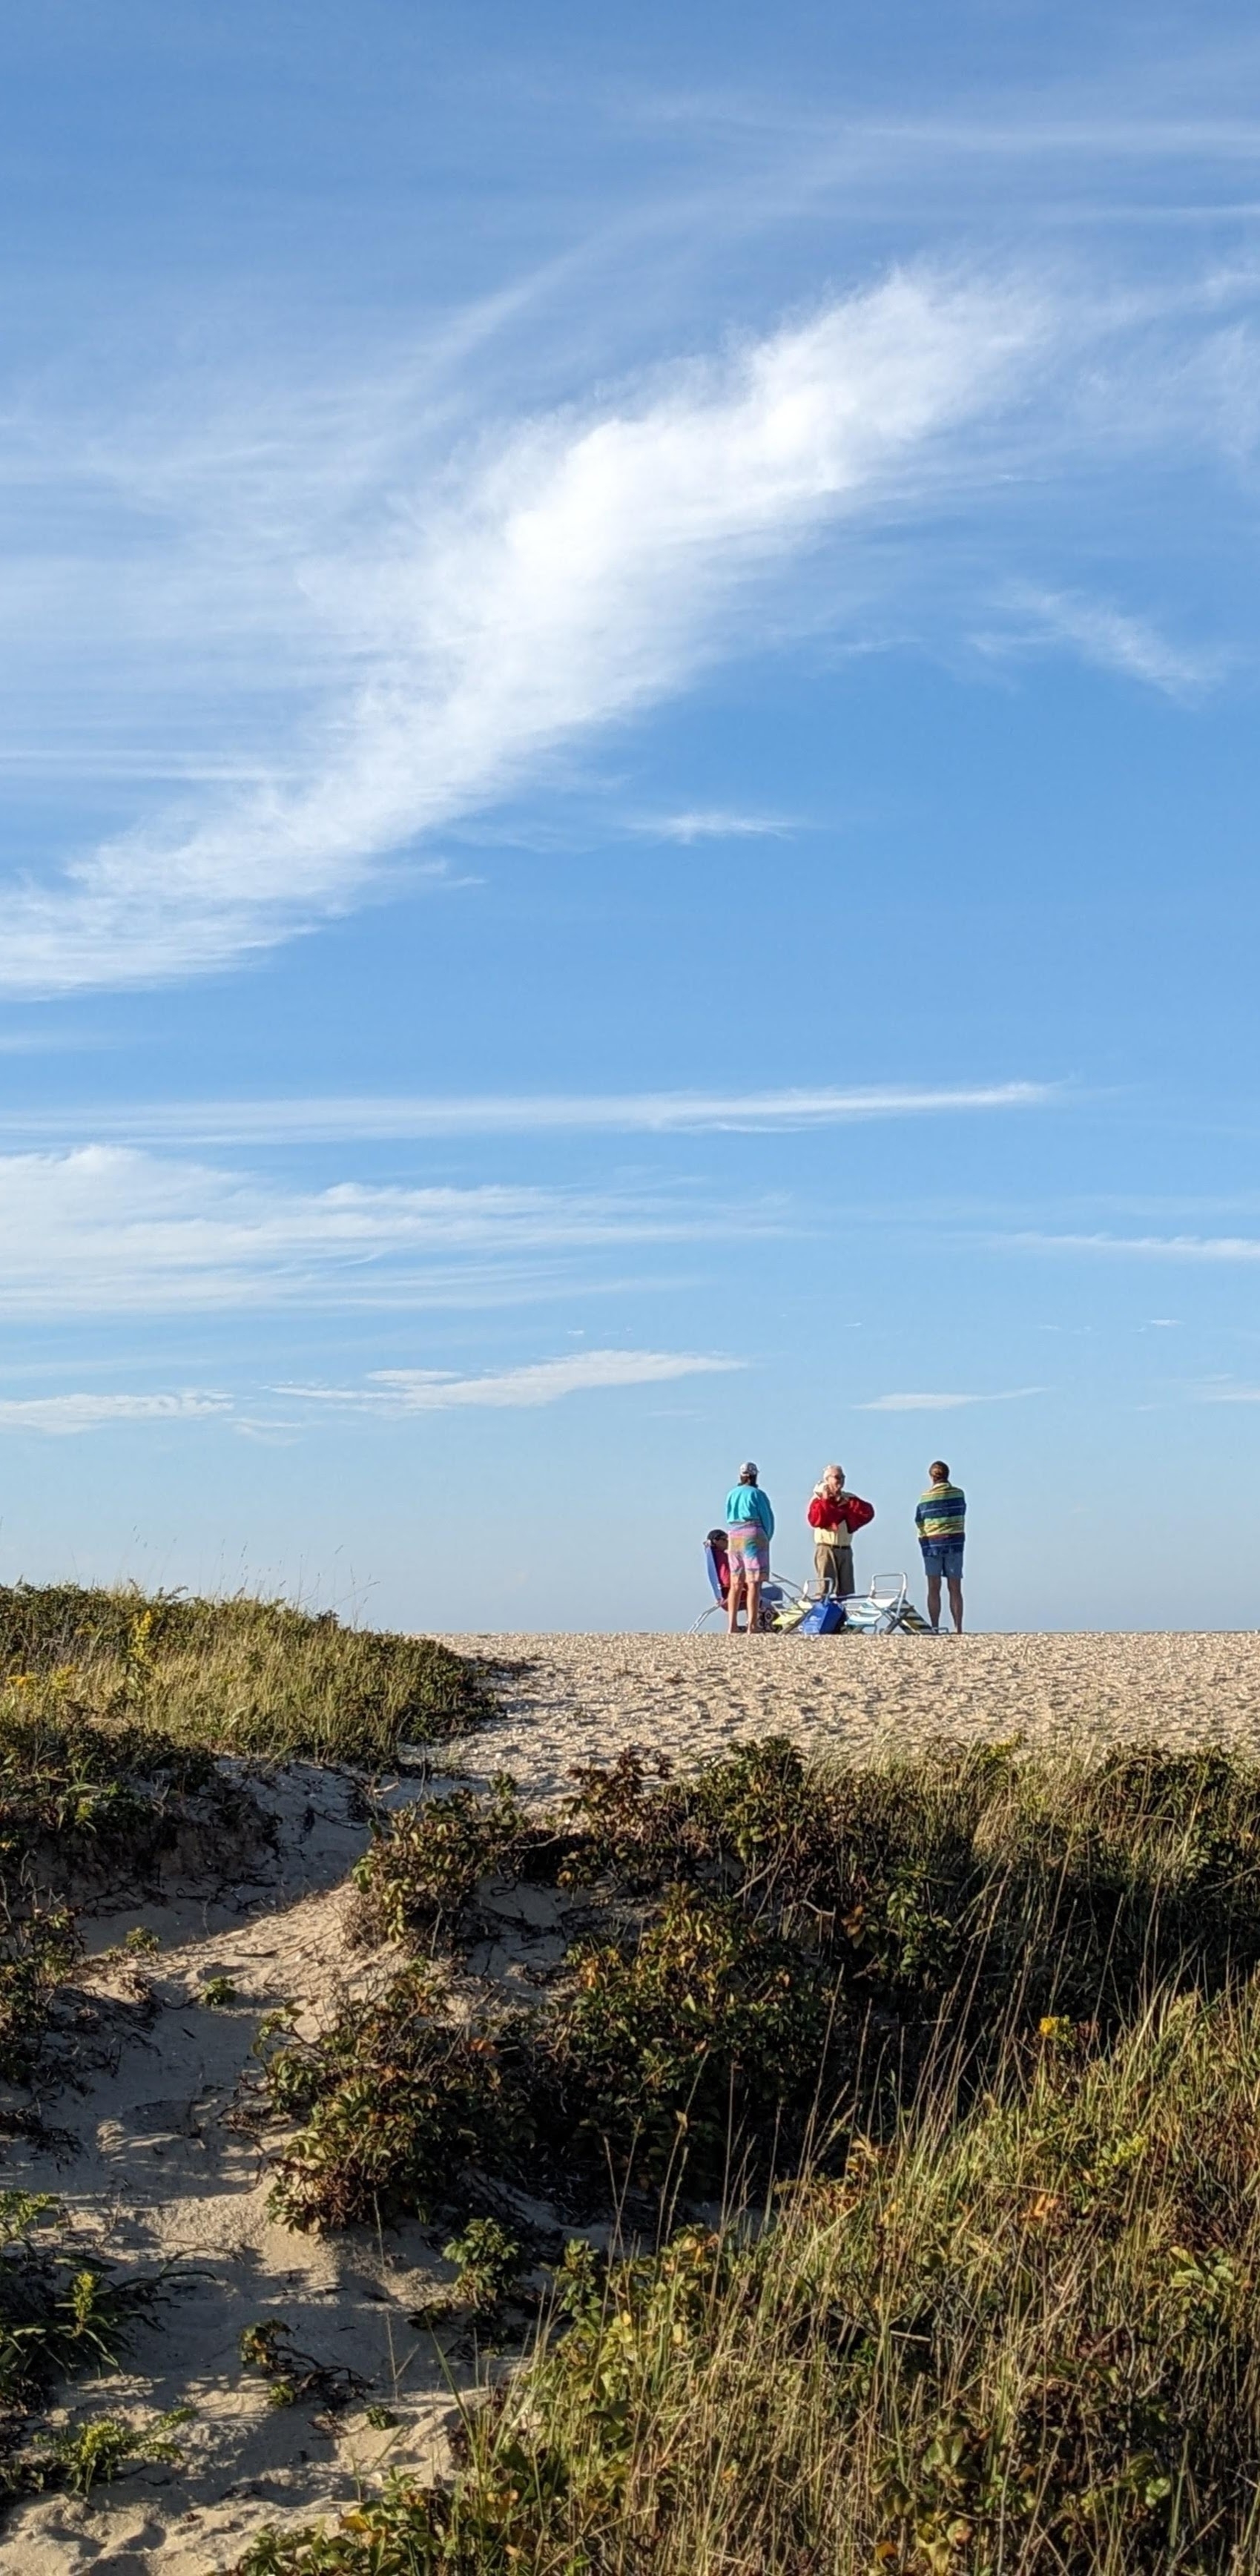 Sky, beach dunes, and four distant figures on the beach, Nantucket, MA, USA